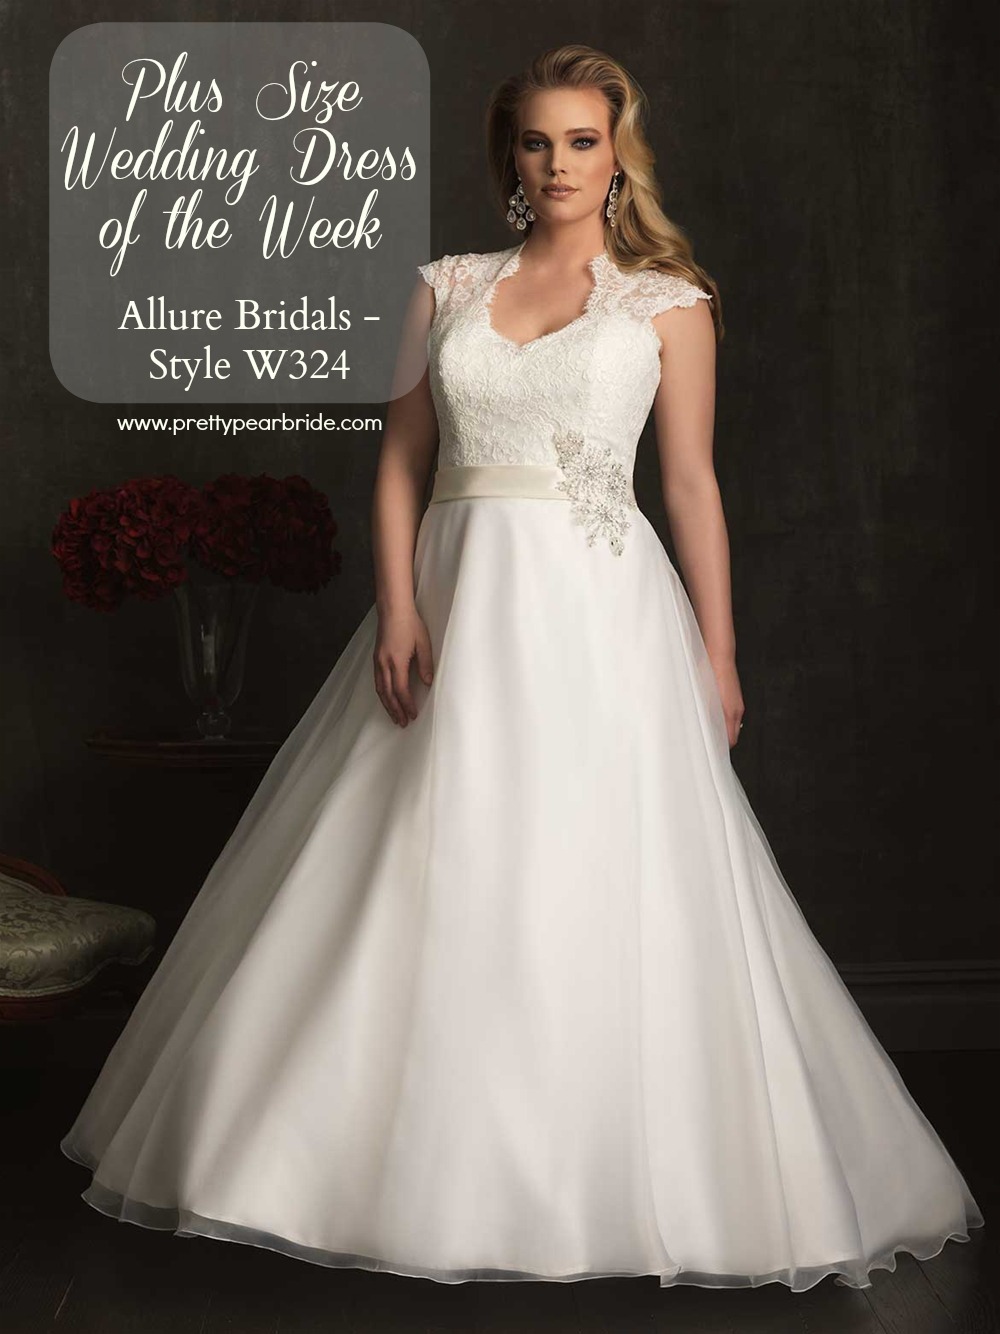 Plus Size Wedding Dress of the Week} Allure Bridal - Style W324 - The  Pretty Pear Bride - Plus Size Bridal Magazine